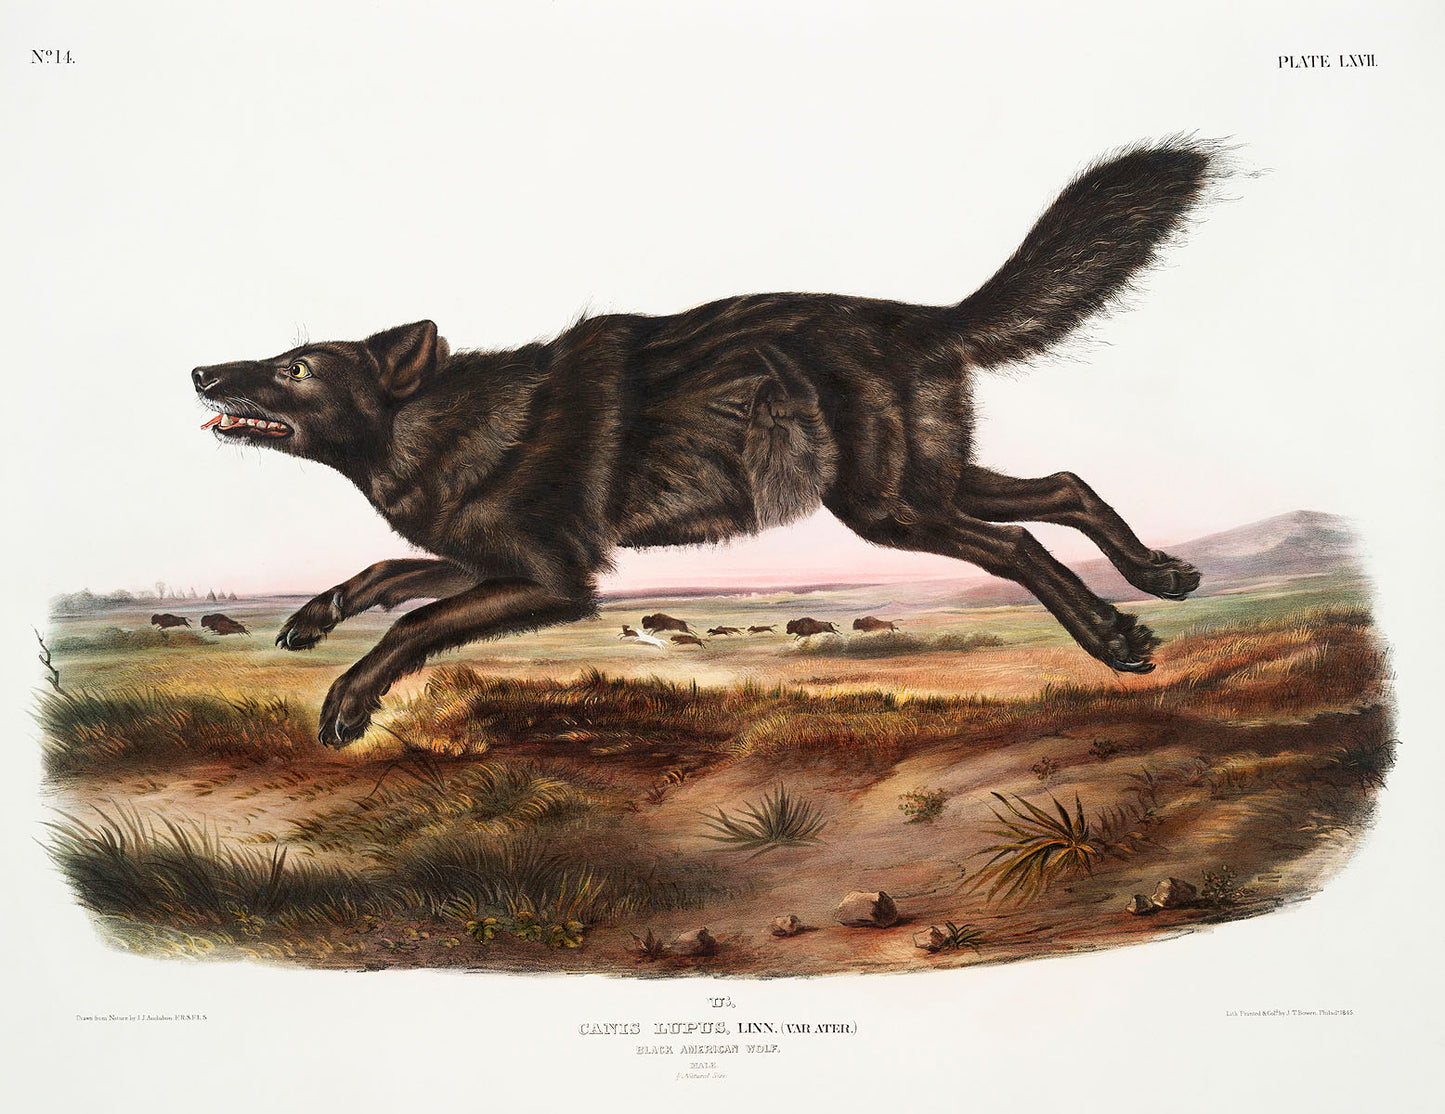 Black American Wolf (Canis lupus) by John James Audubon-WEB